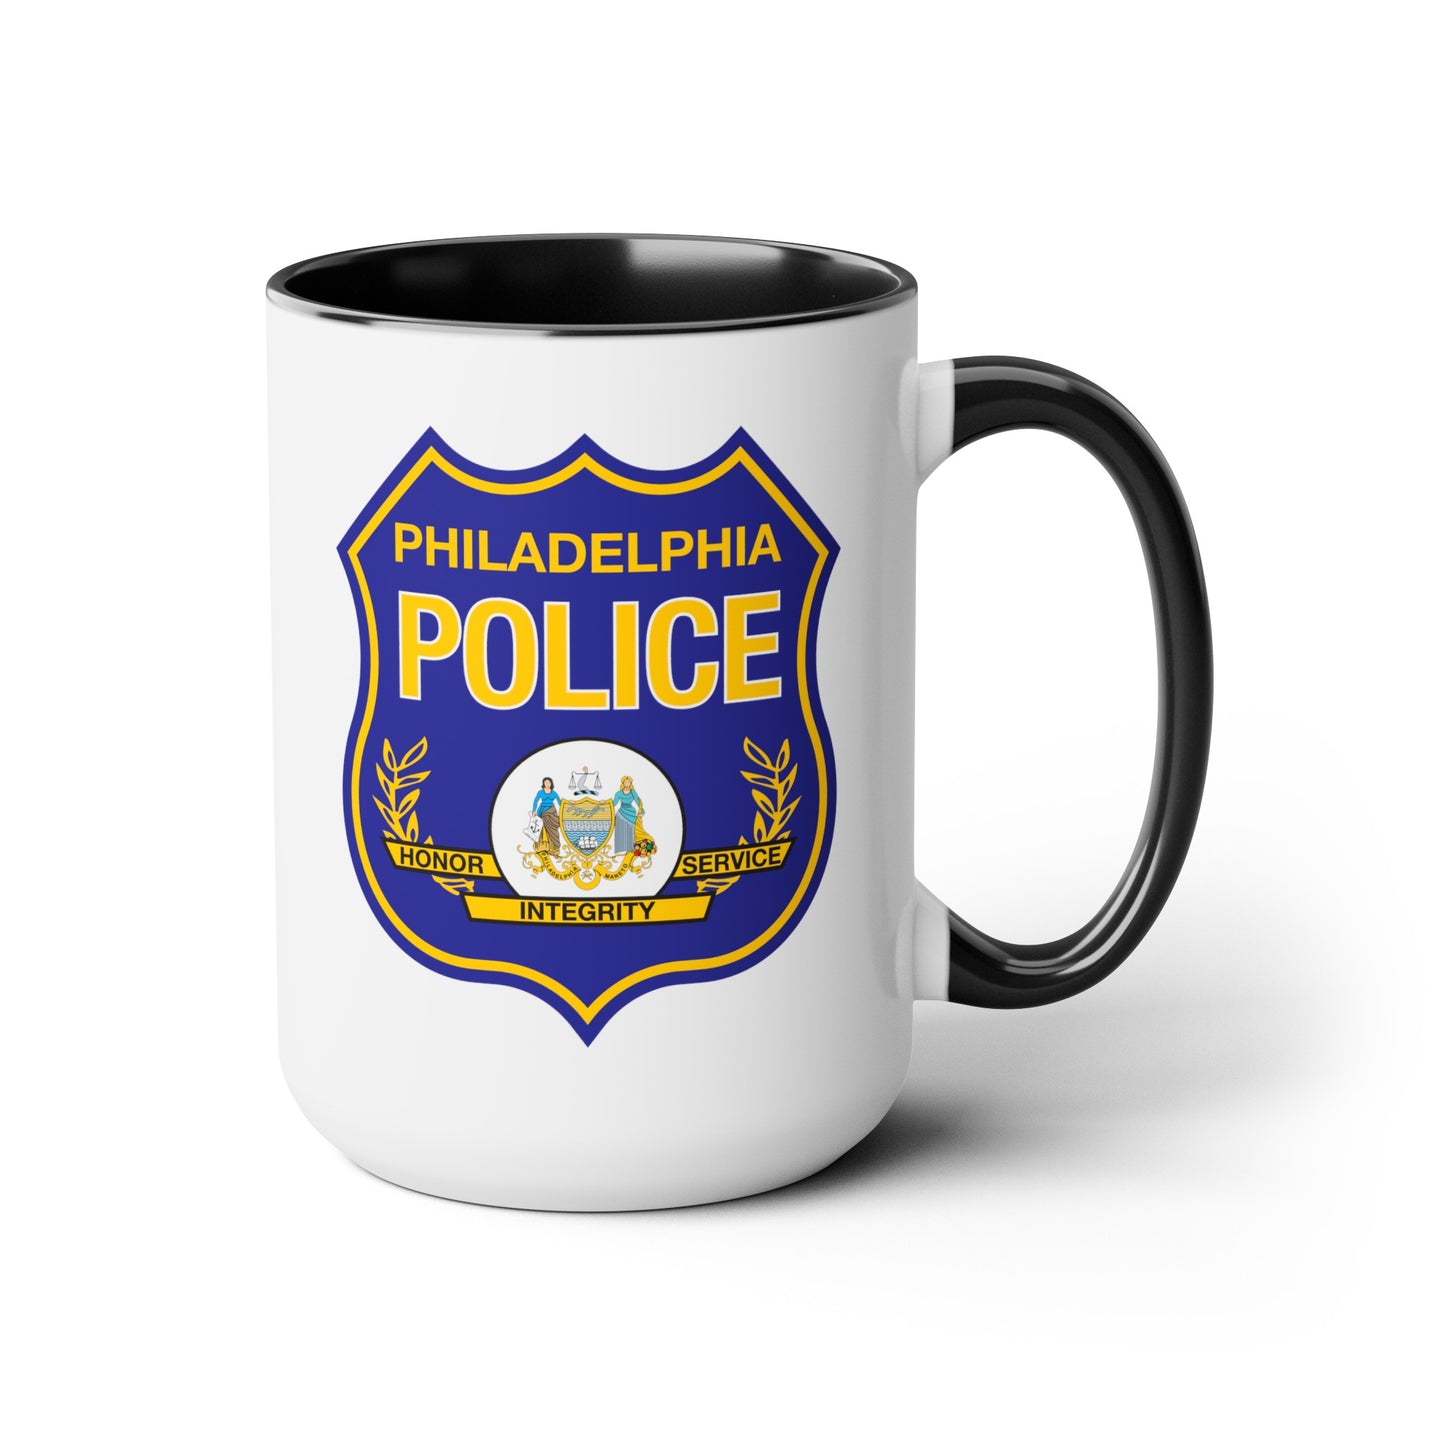 Philadelphia Police Coffee Mug - Double Sided Black Accent White Ceramic 15oz by TheGlassyLass.com